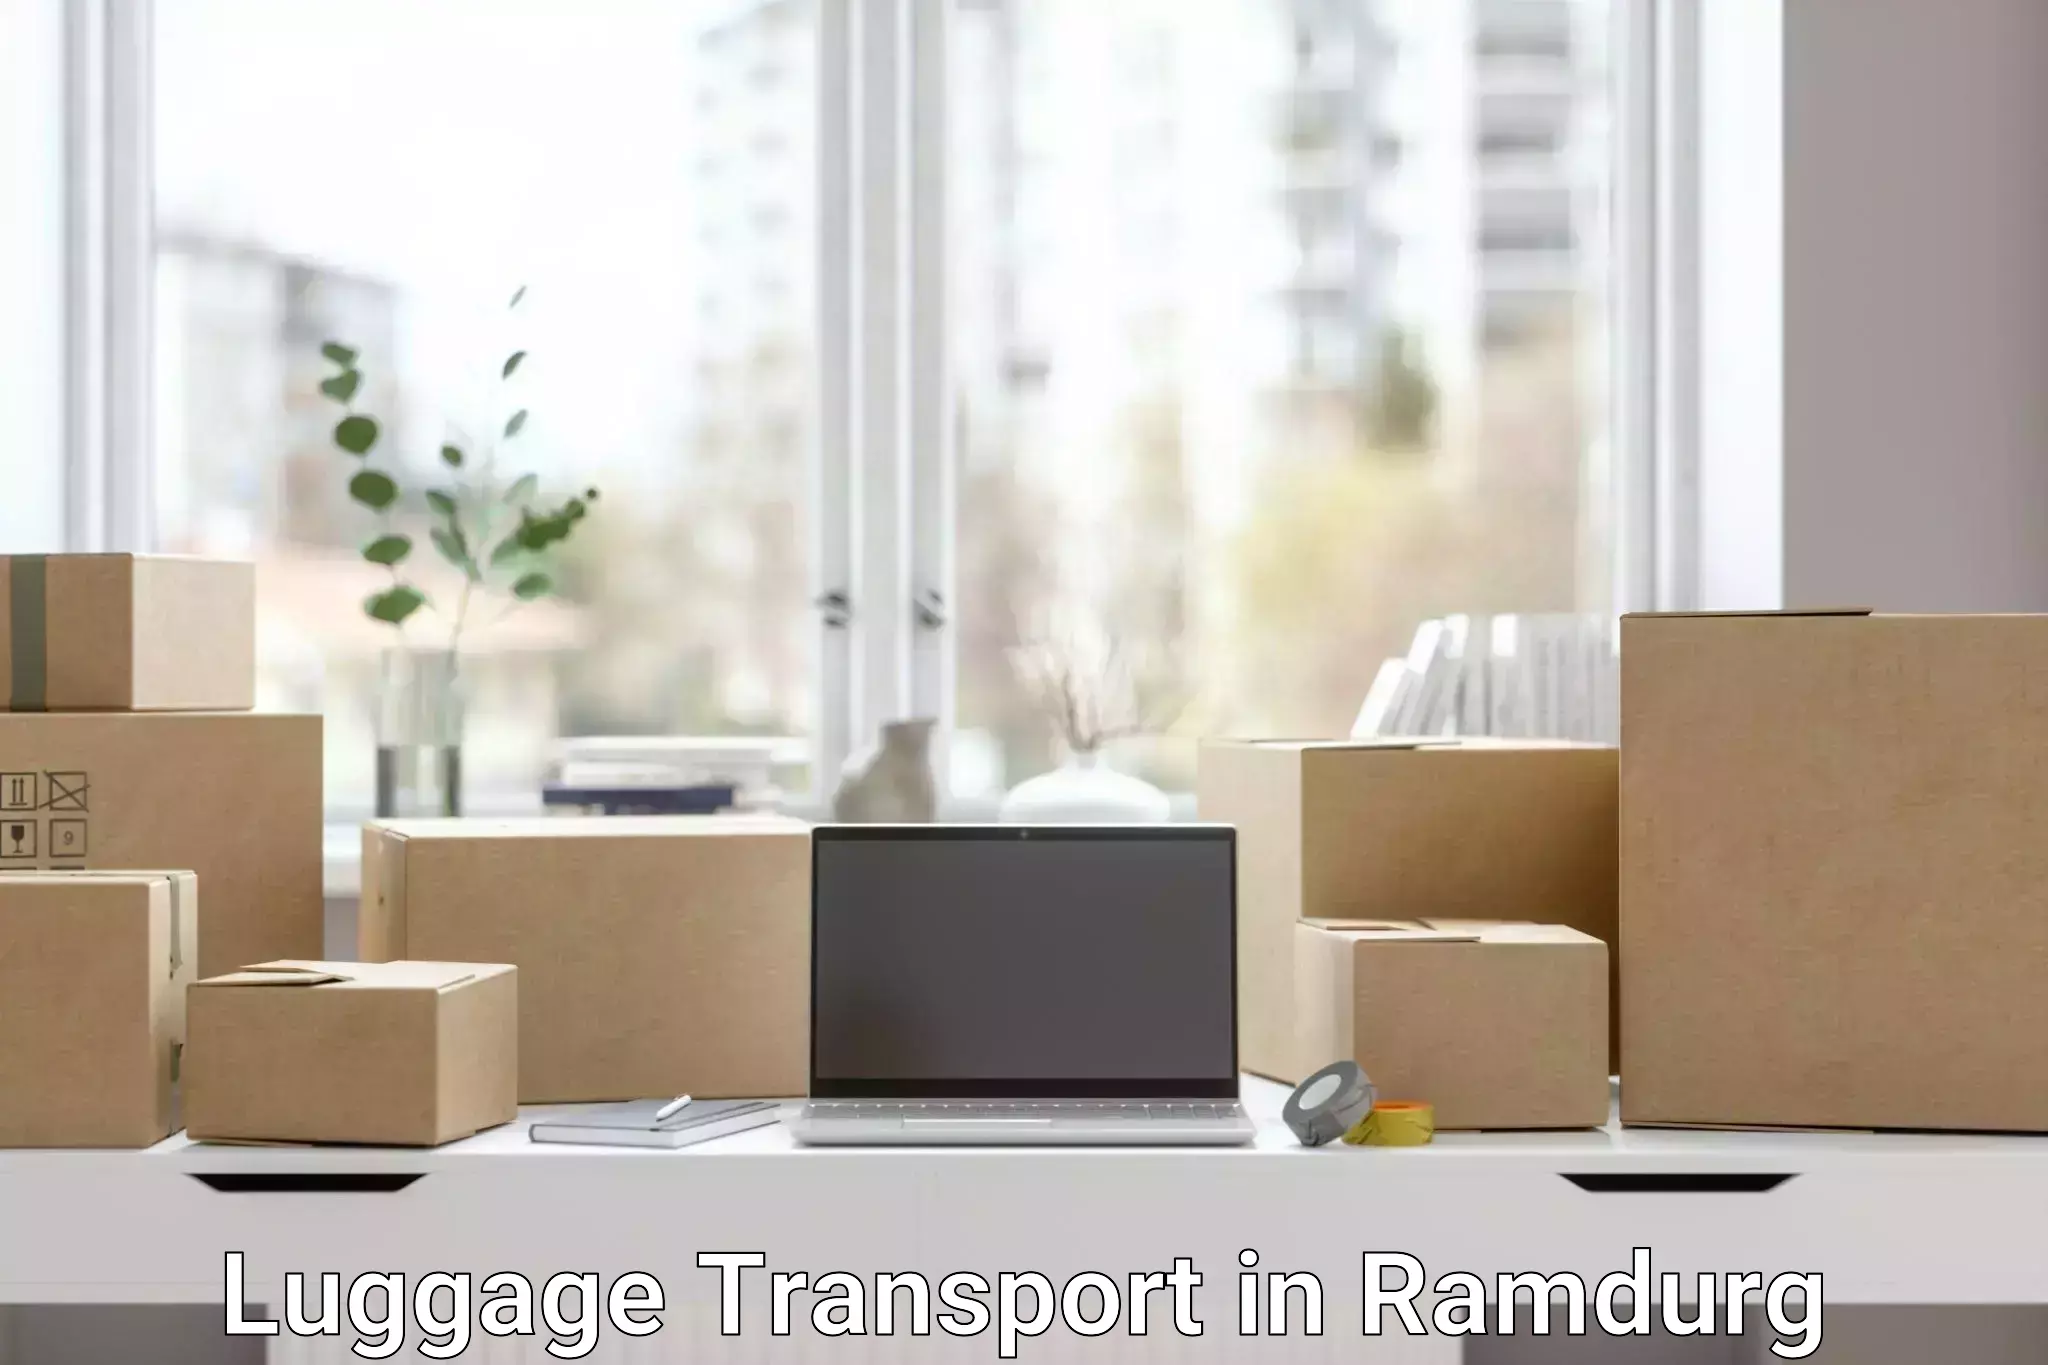 Corporate baggage transport in Ramdurg